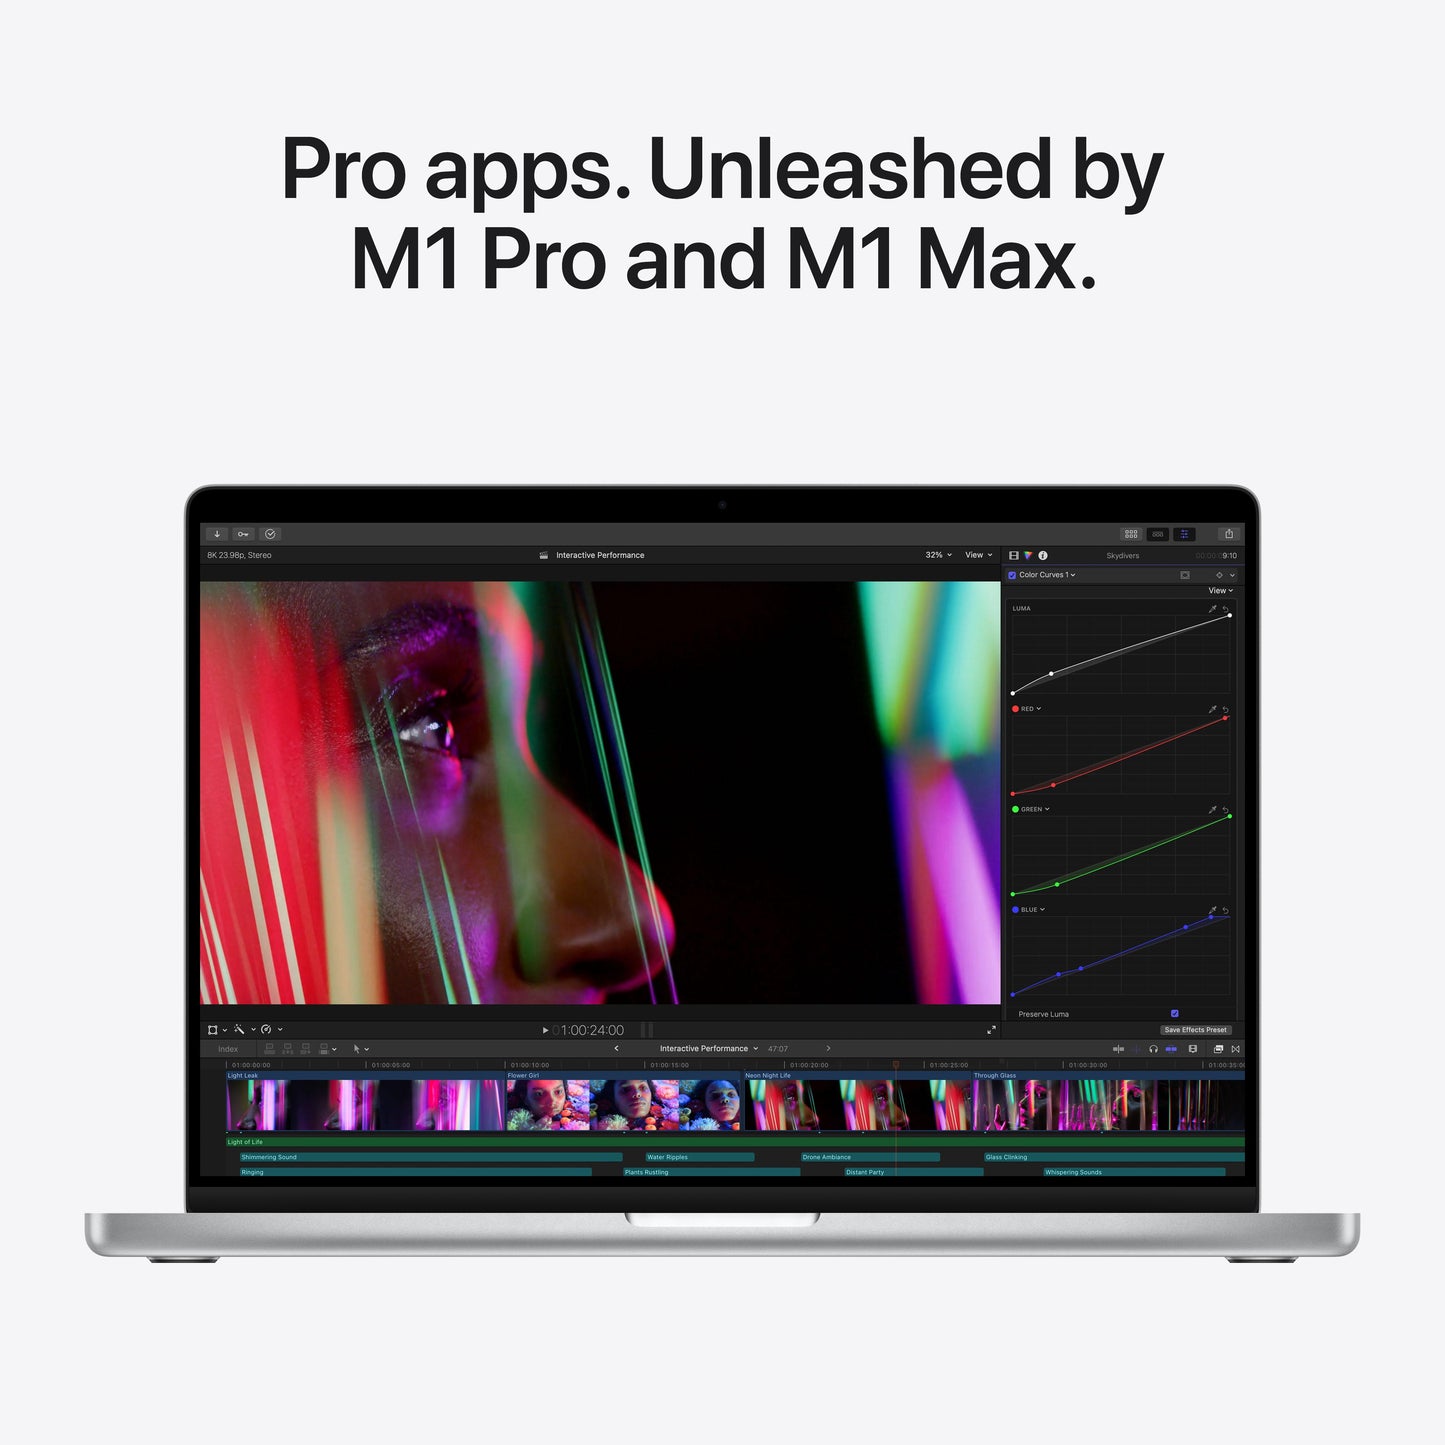 14-inch MacBook Pro: Apple M1 Pro chip with 10_core CPU and 16_core GPU, 1TB SSD - Silver